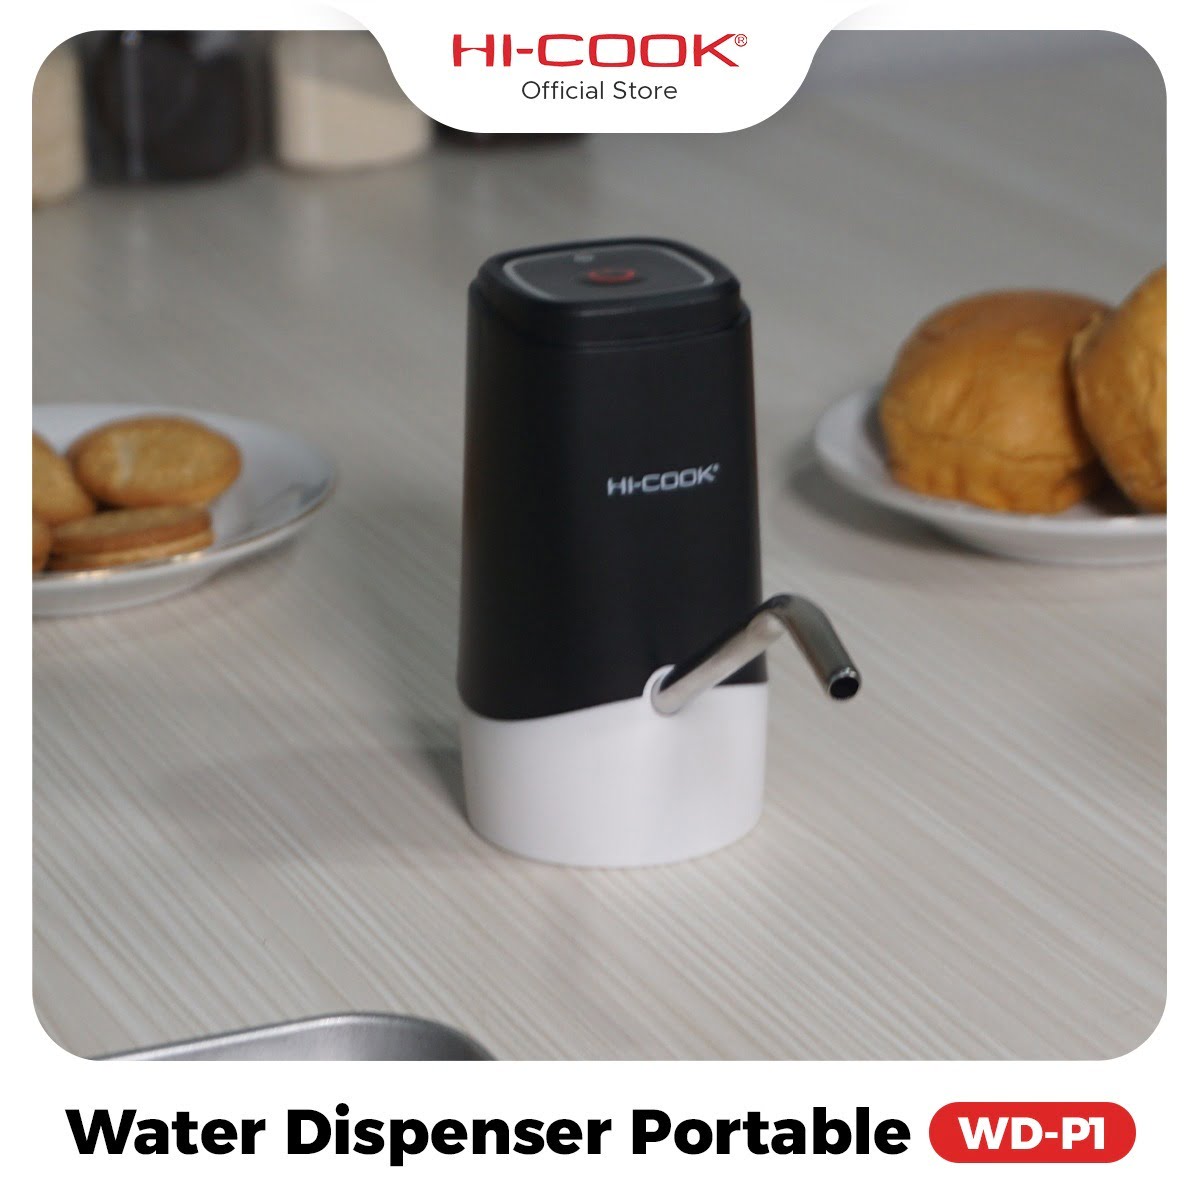 Water Dispenser Portable WD-P1